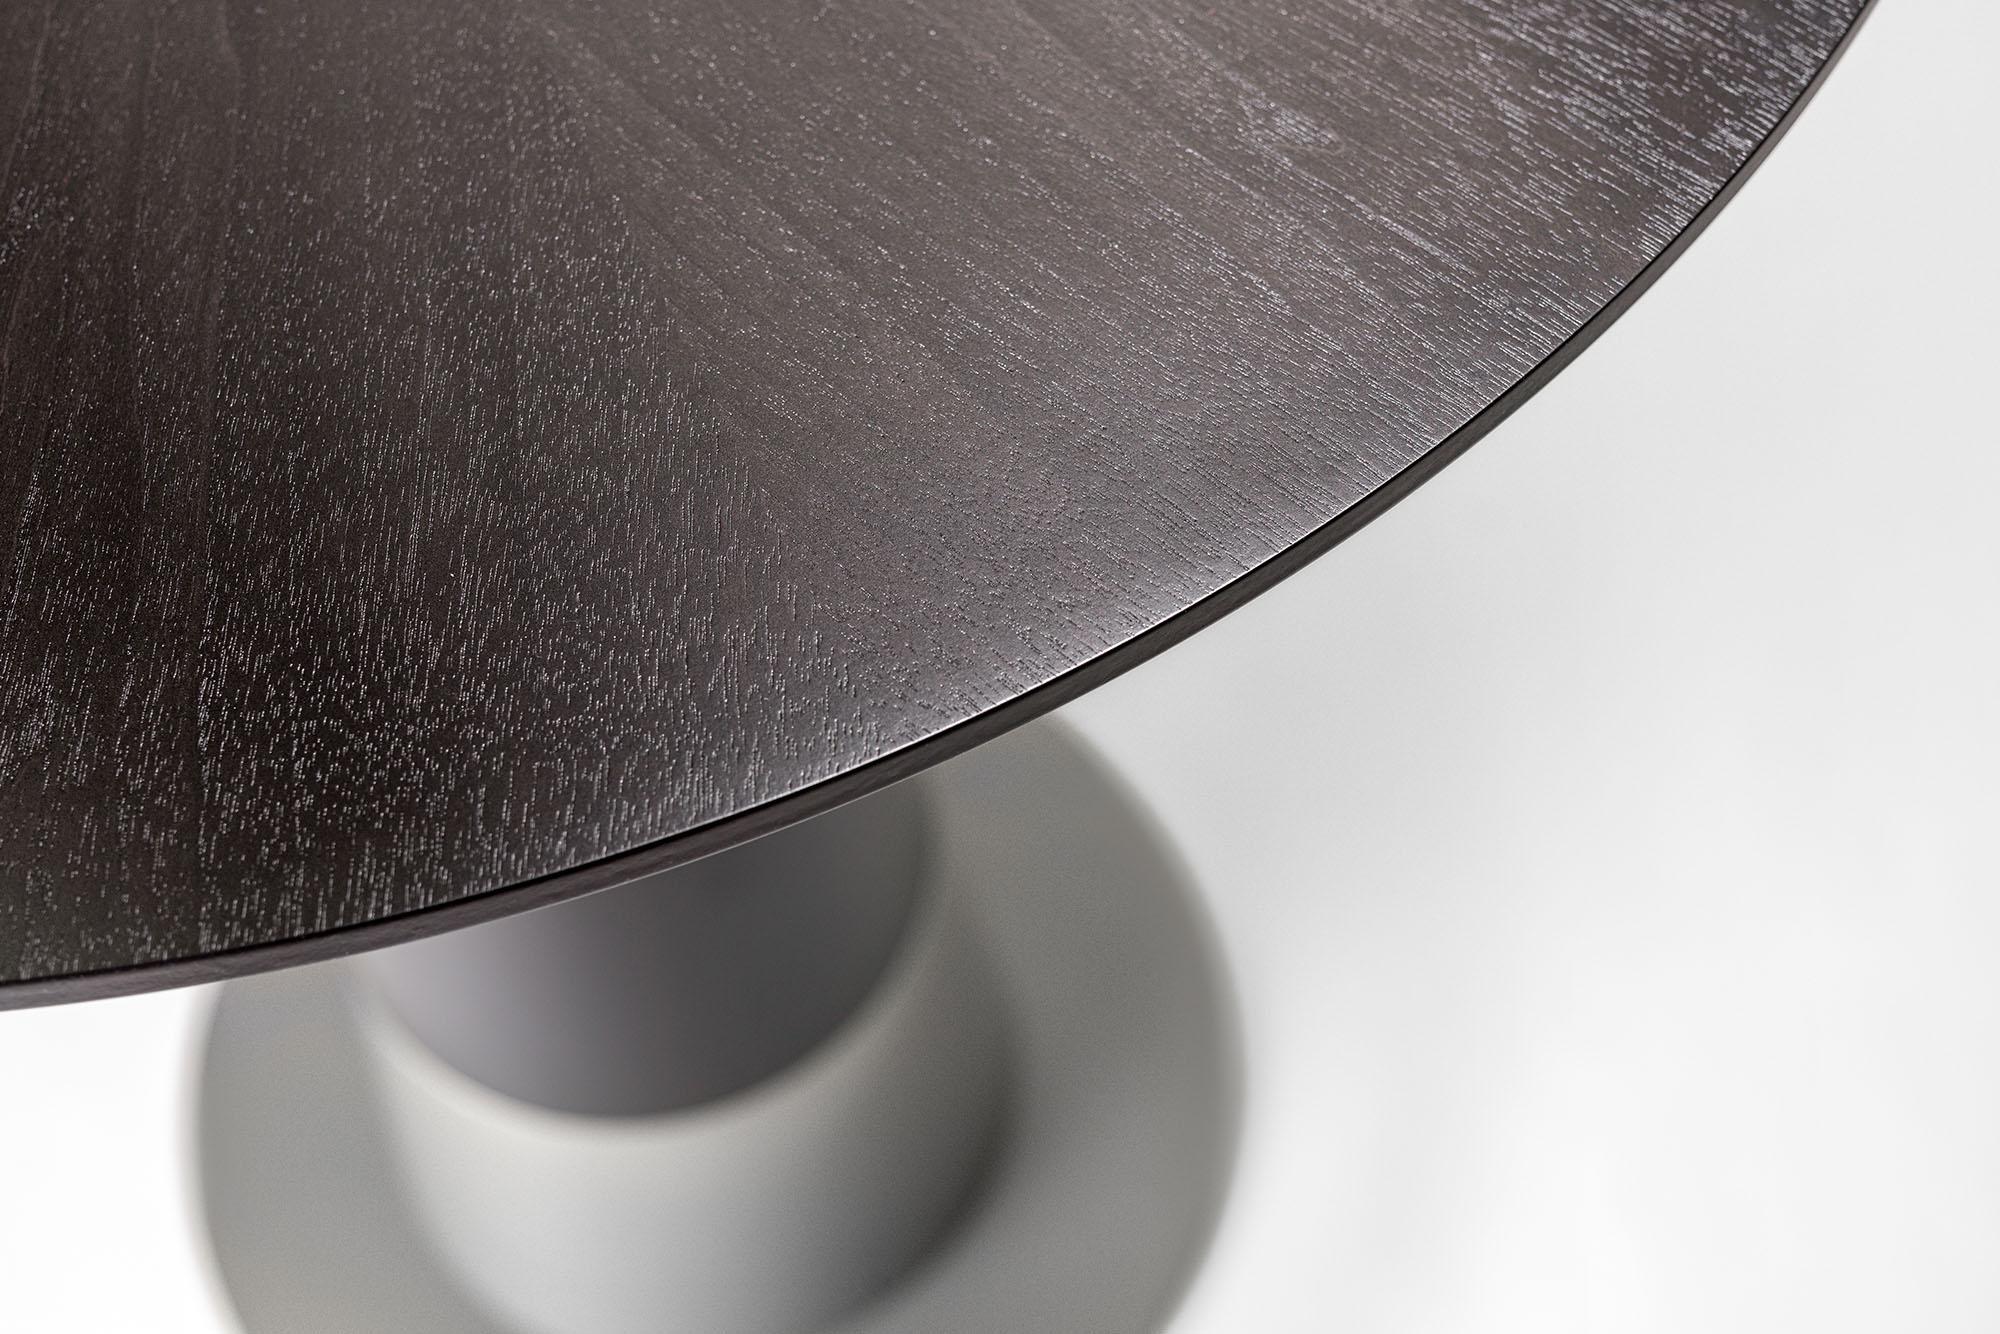 American LUMA Silo Bar Pedestal Round Table with Dark Wood and Nickel Powder Coat Metal For Sale